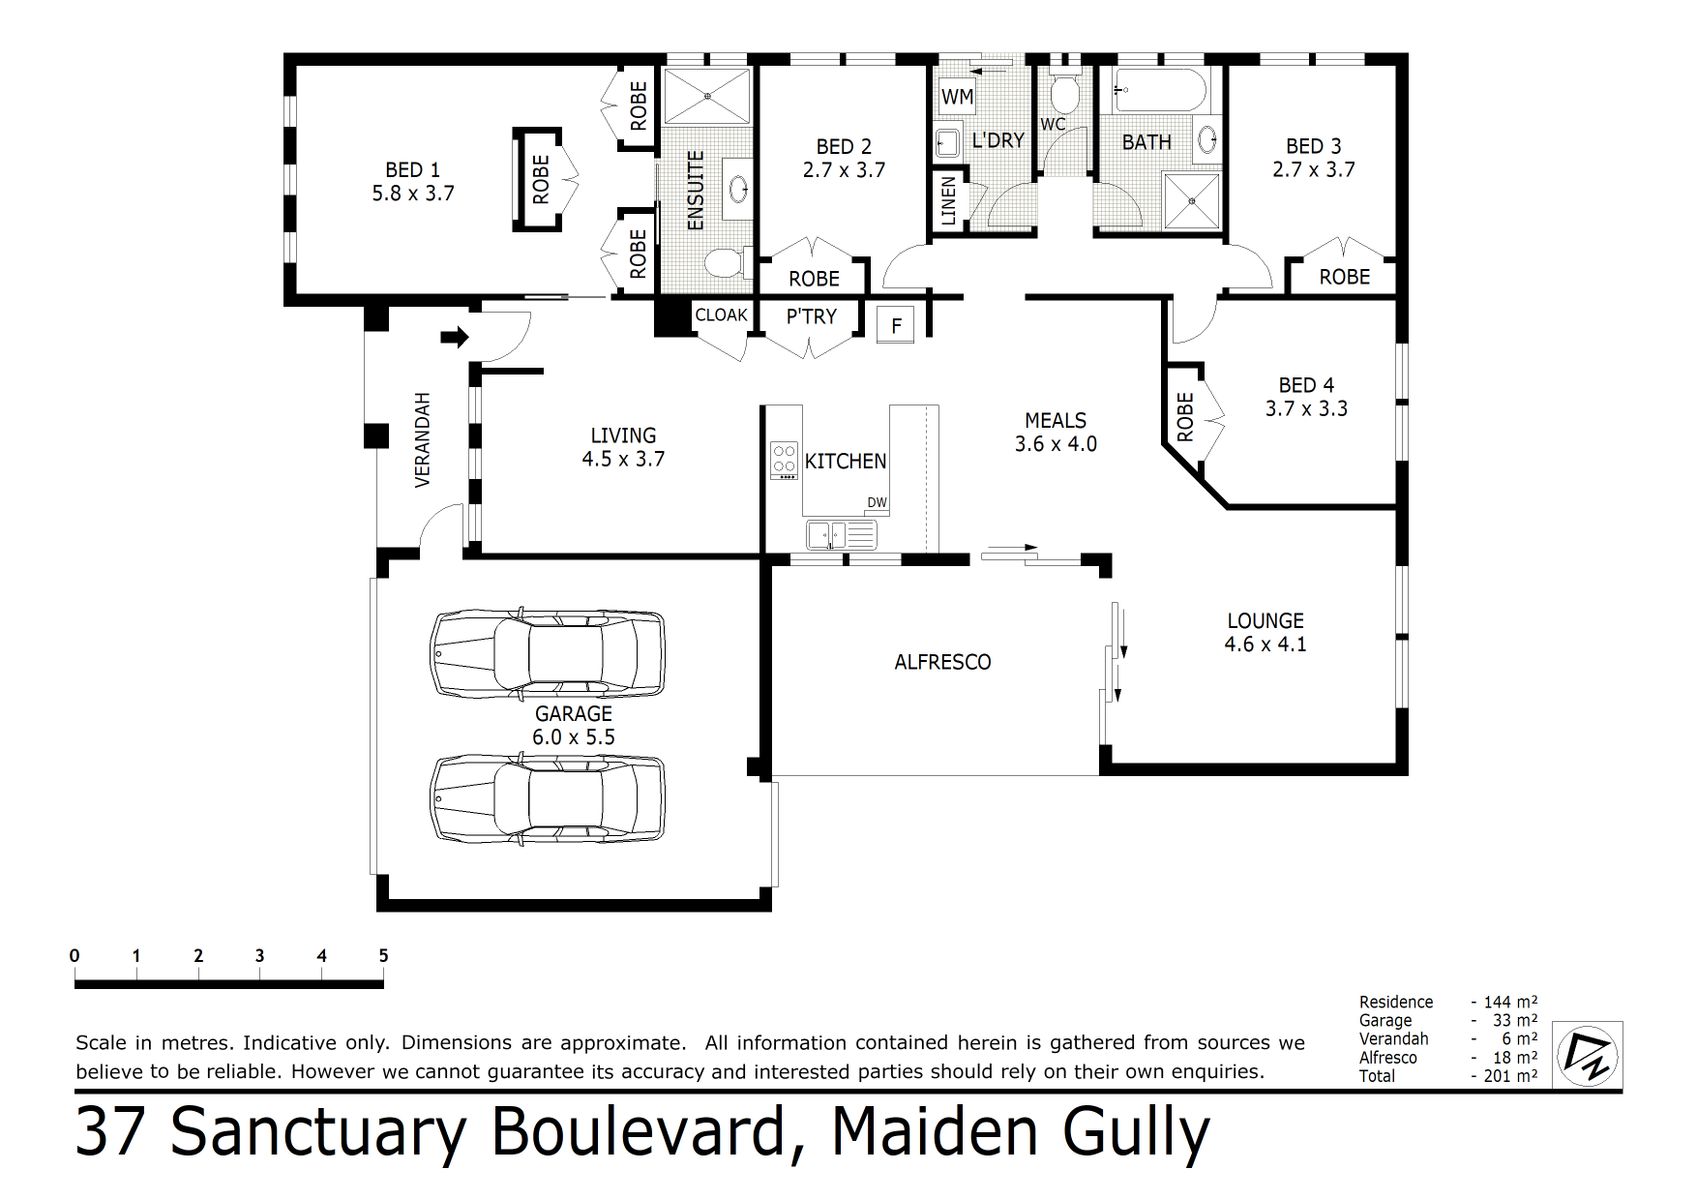 37 Sanctuary Boulevard Maiden Gully (20 SEP 2021) 177sqm